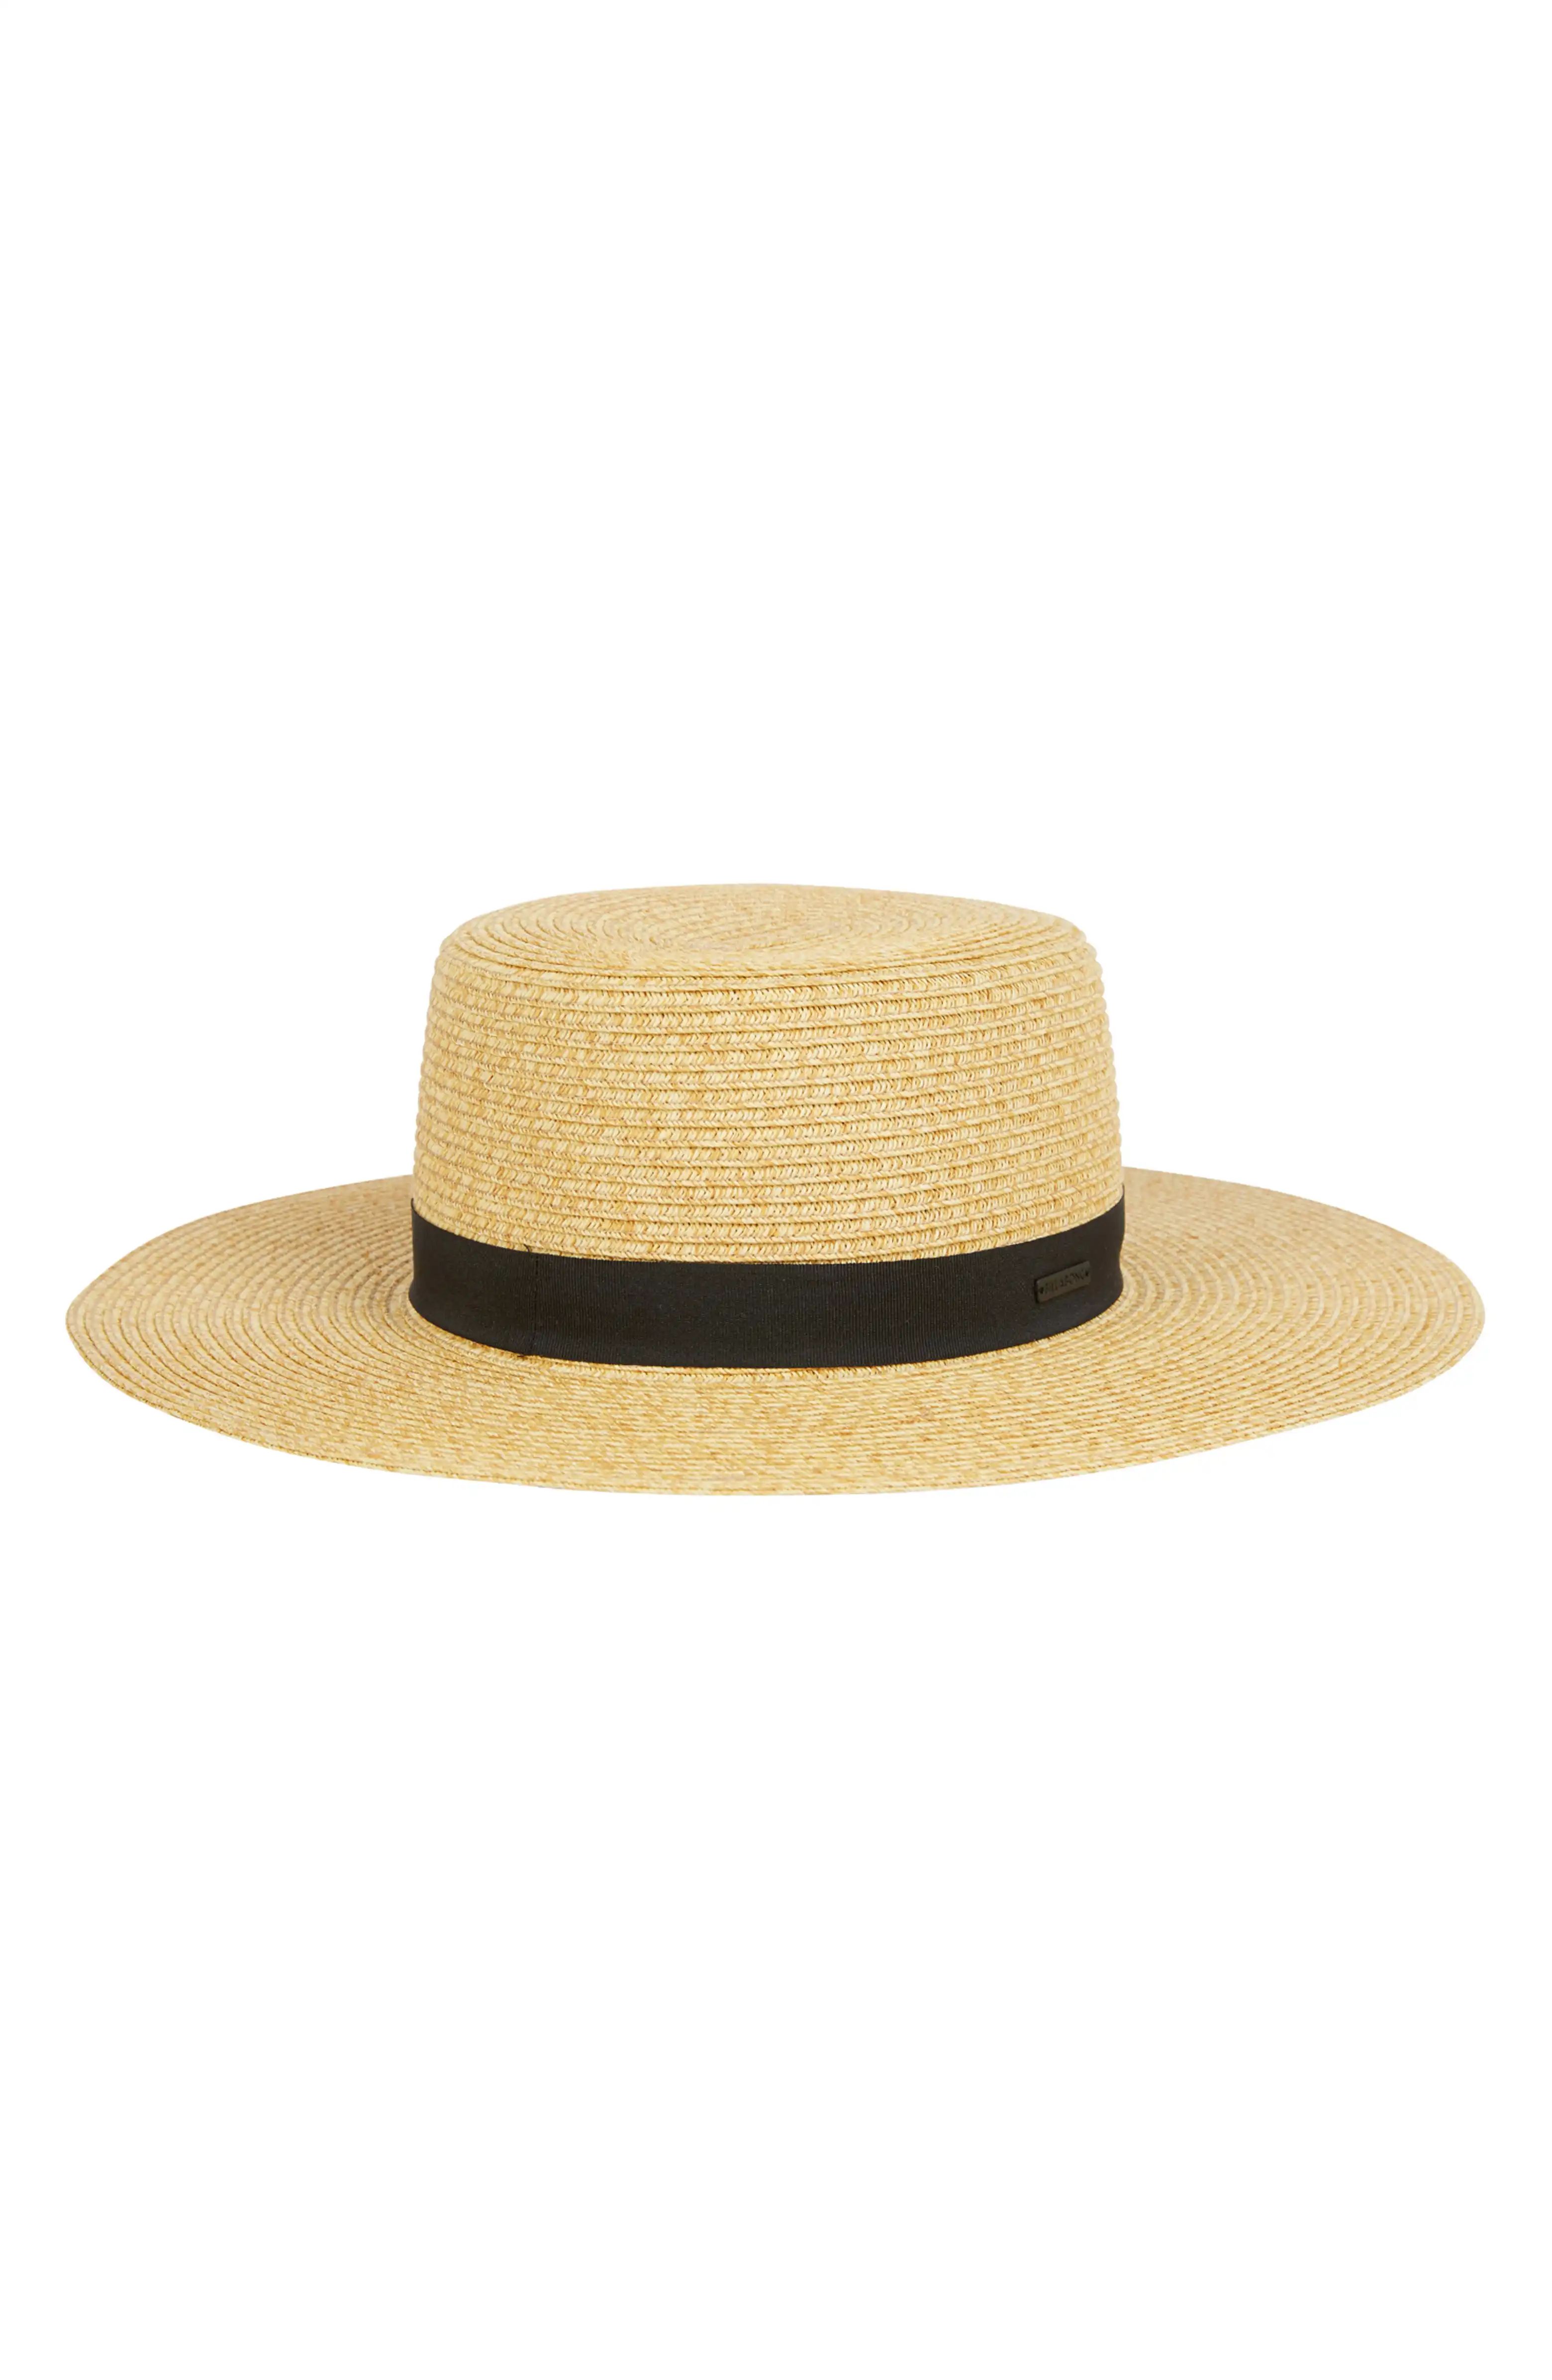 Aboat Time Straw Hat | Nordstrom